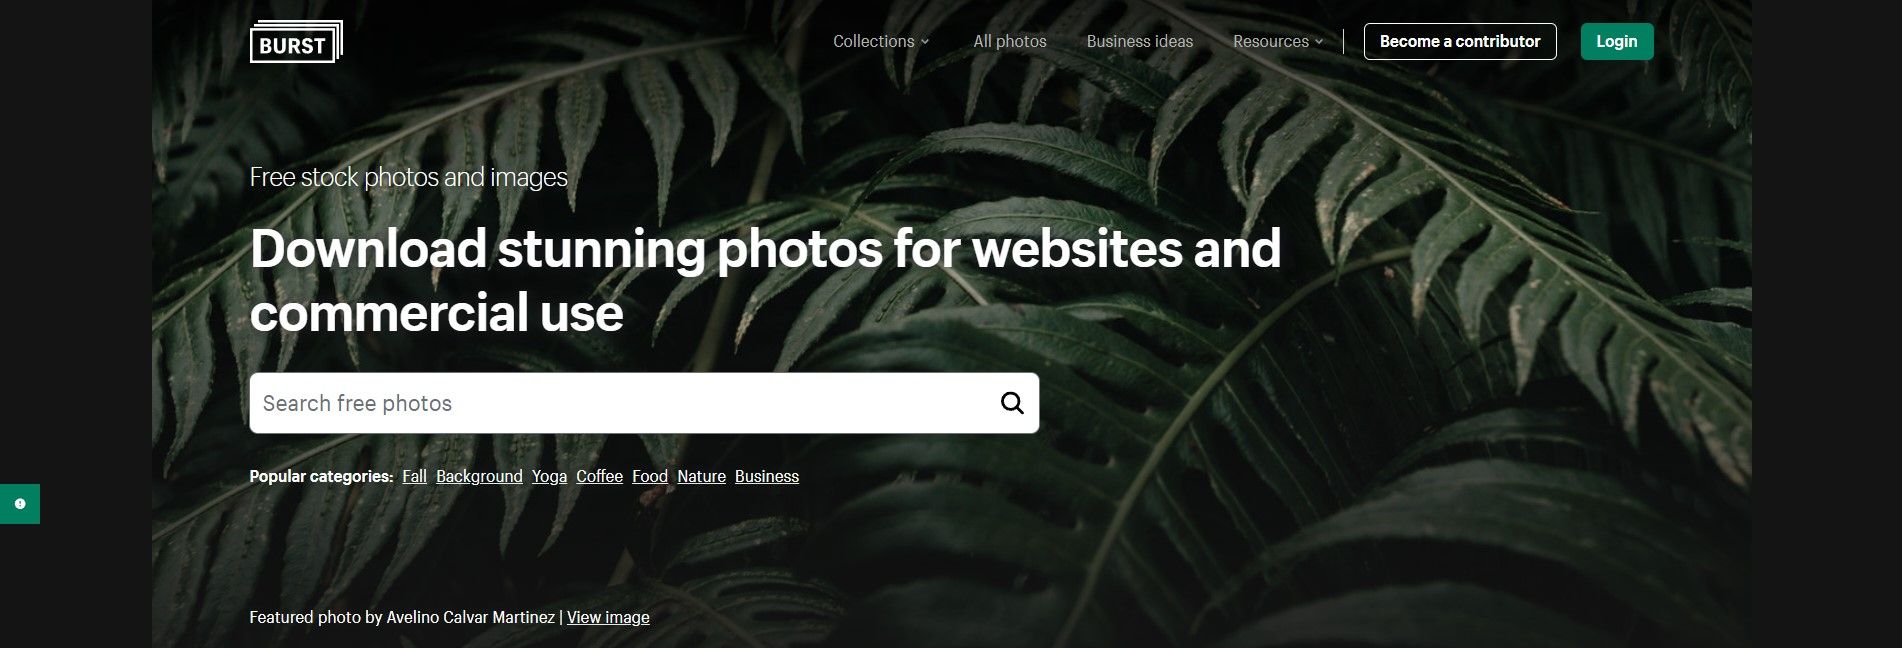 Burst website homepage screenshot